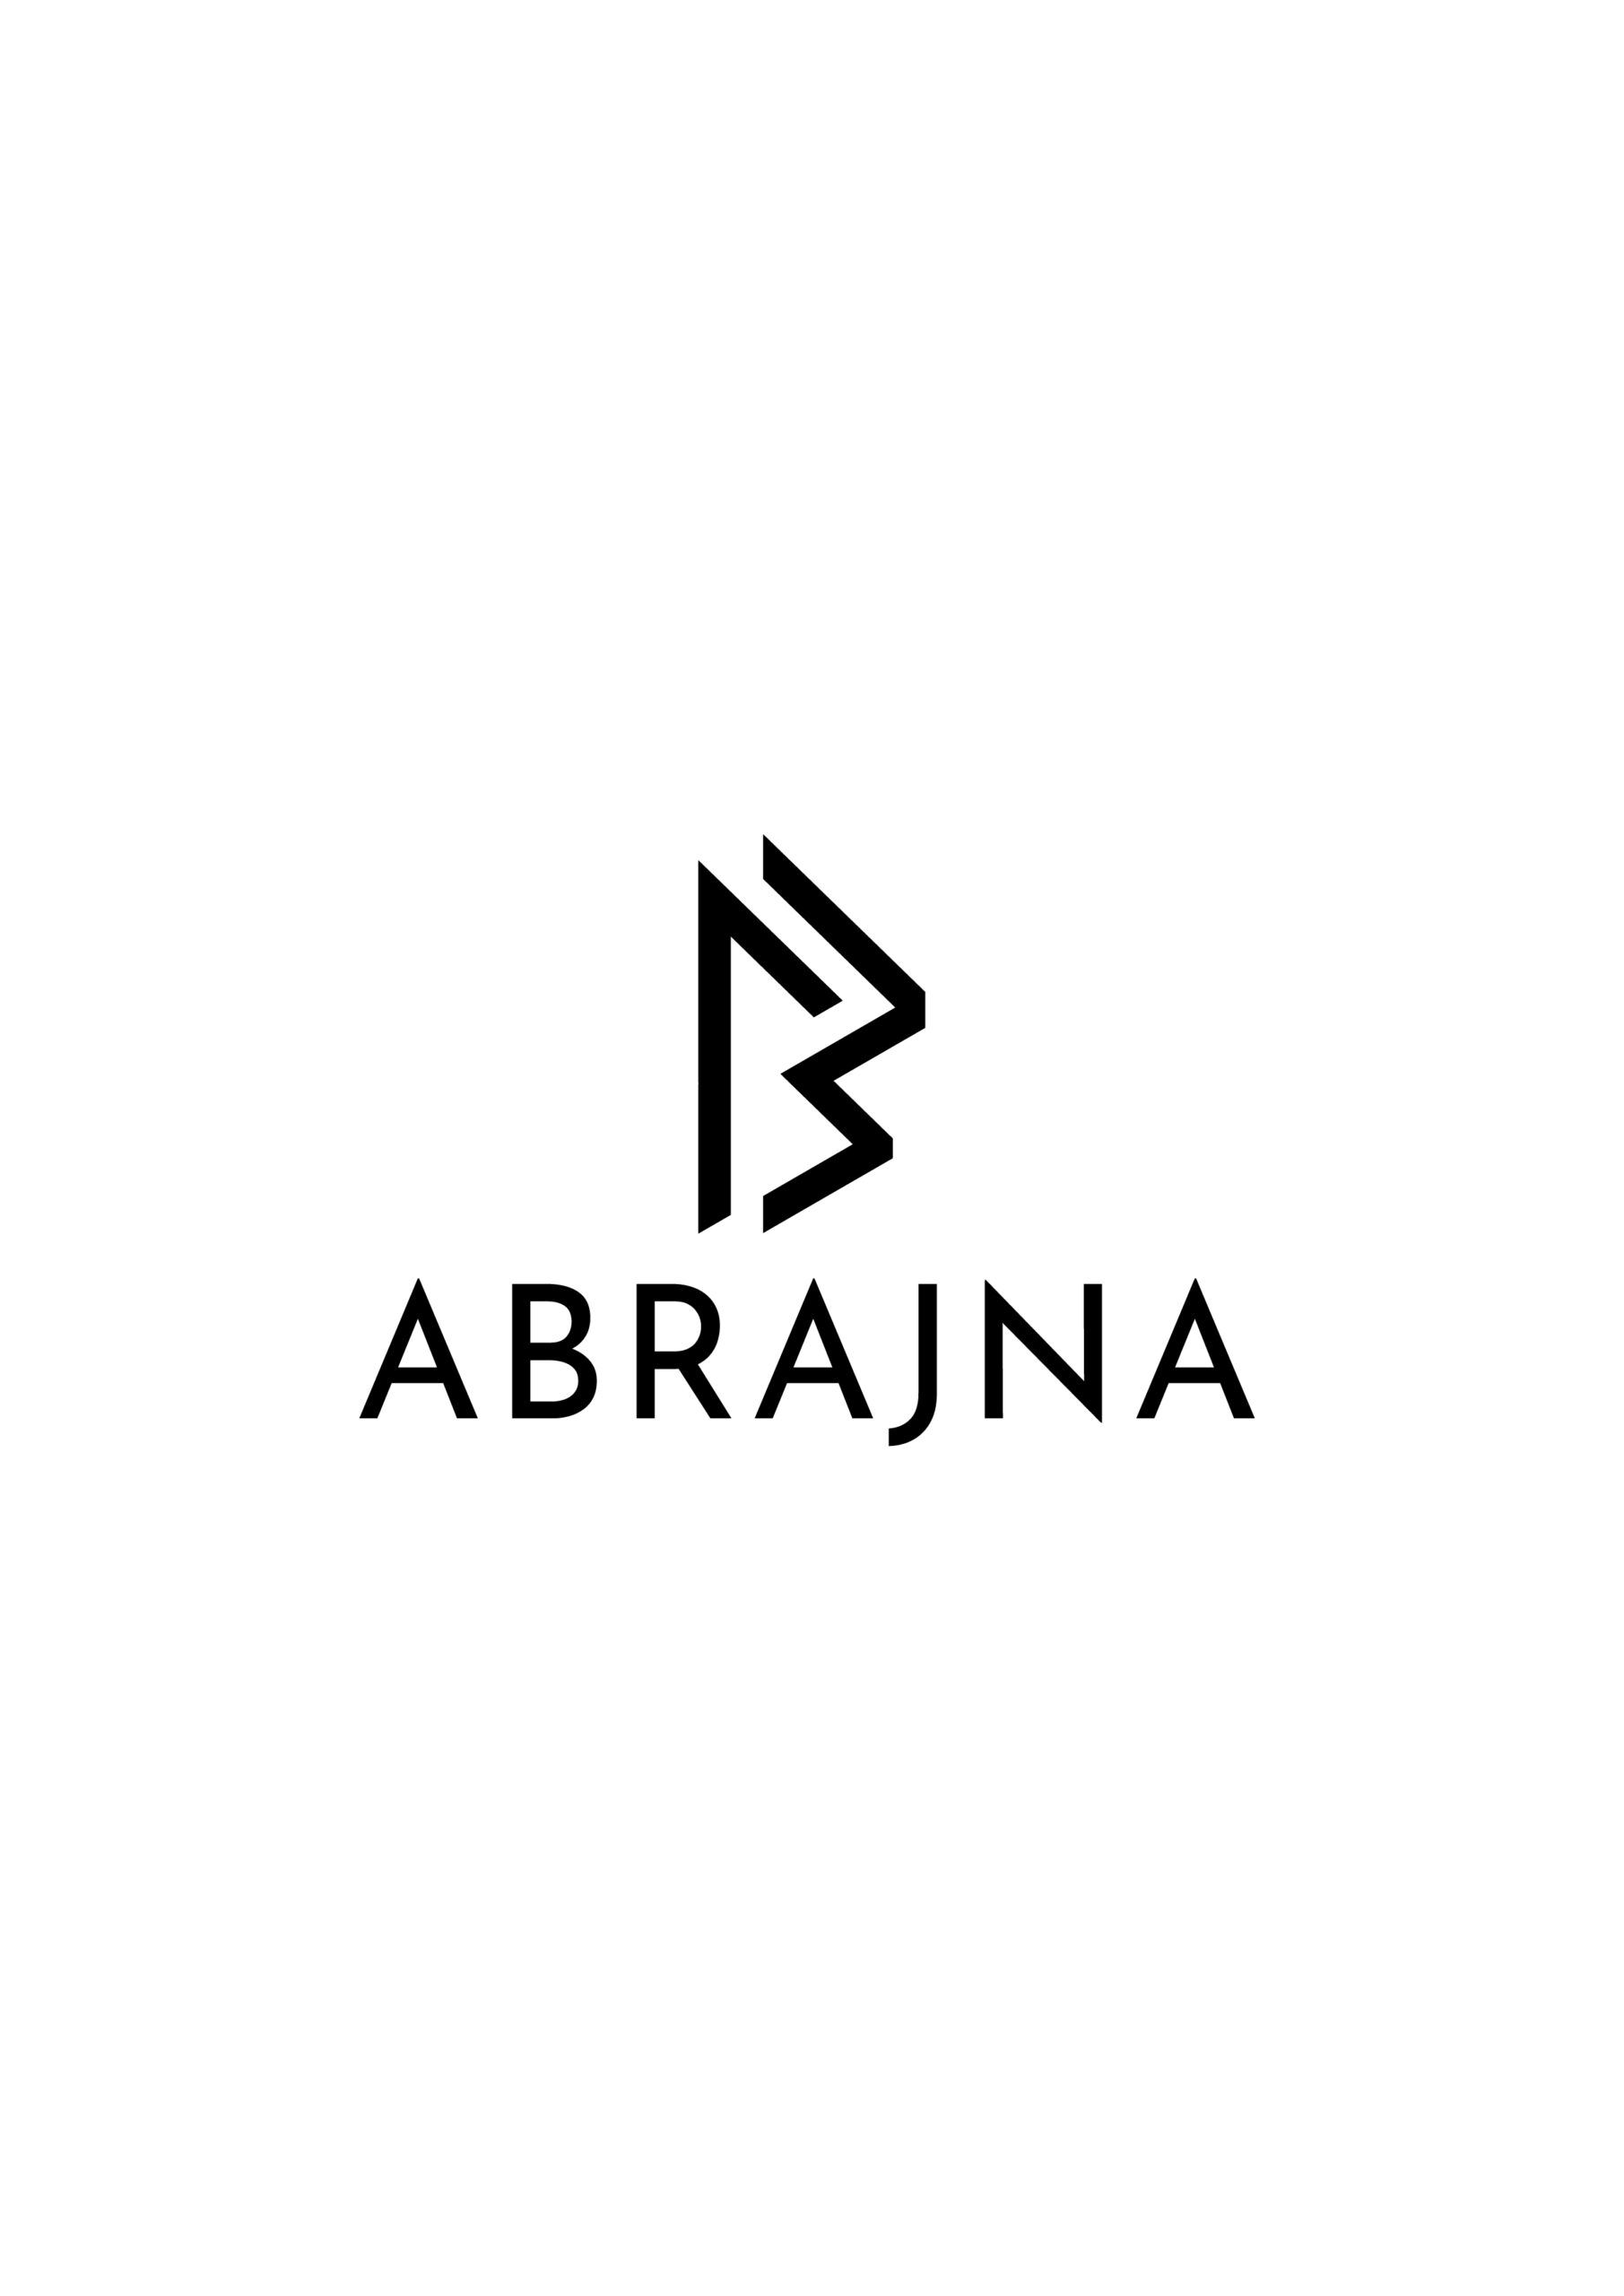 abrajna logo - شعار ابراجنا الرئيسي للسفر والسياحه والخدمات الوساطيه